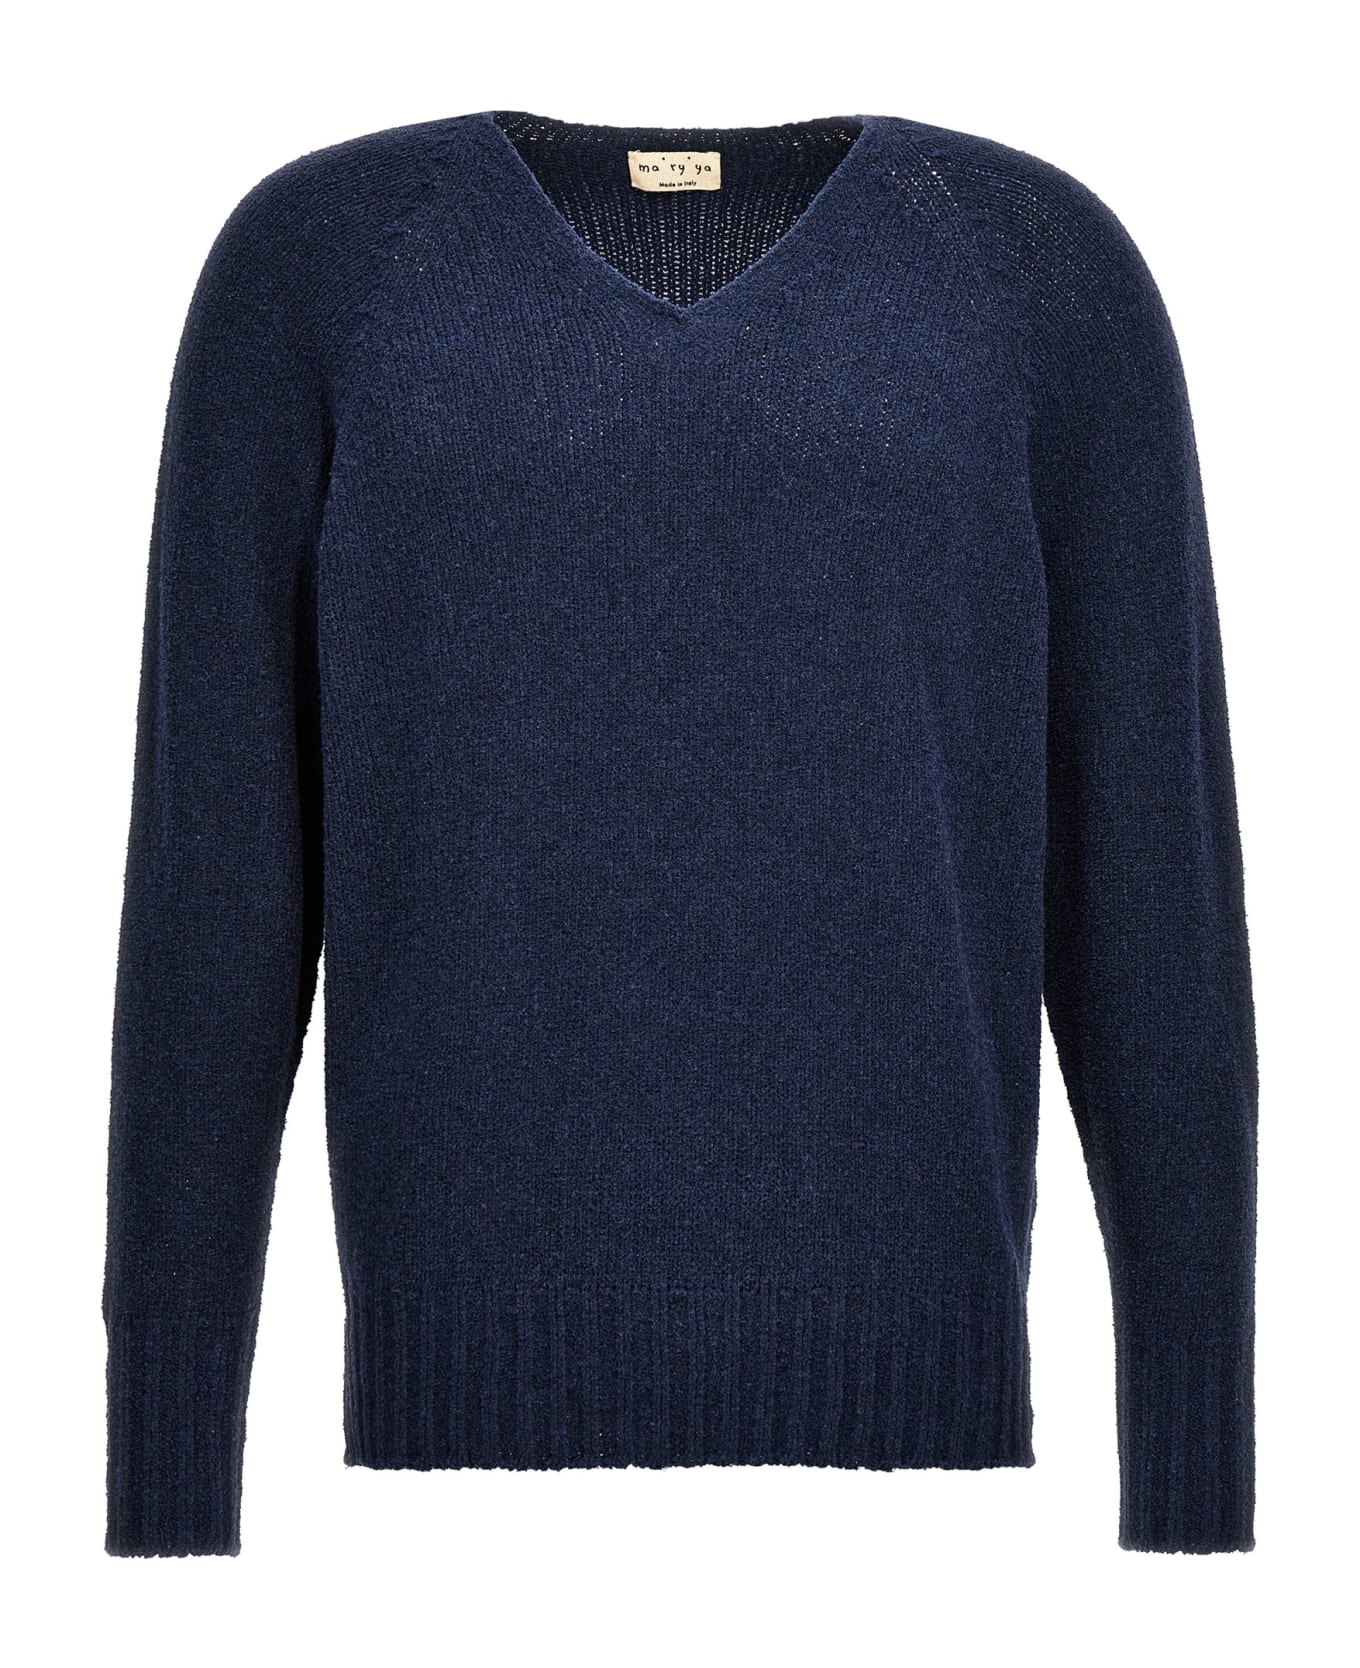 Ma'ry'ya V-neck Sweater - Blue